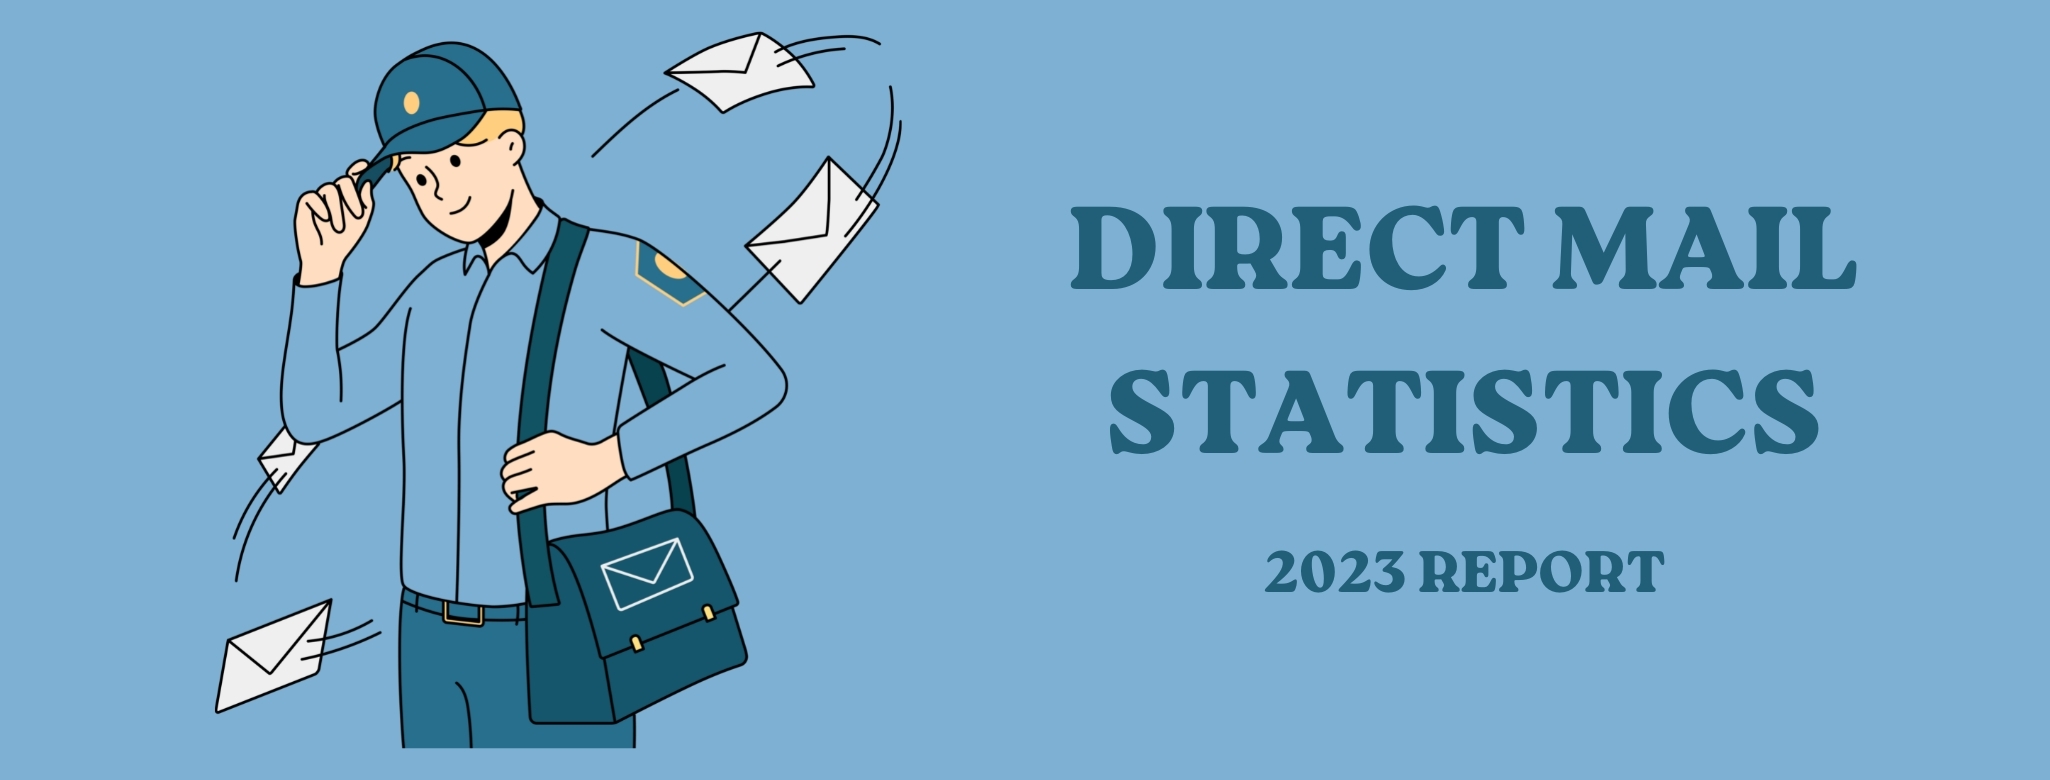 direct mail statistics